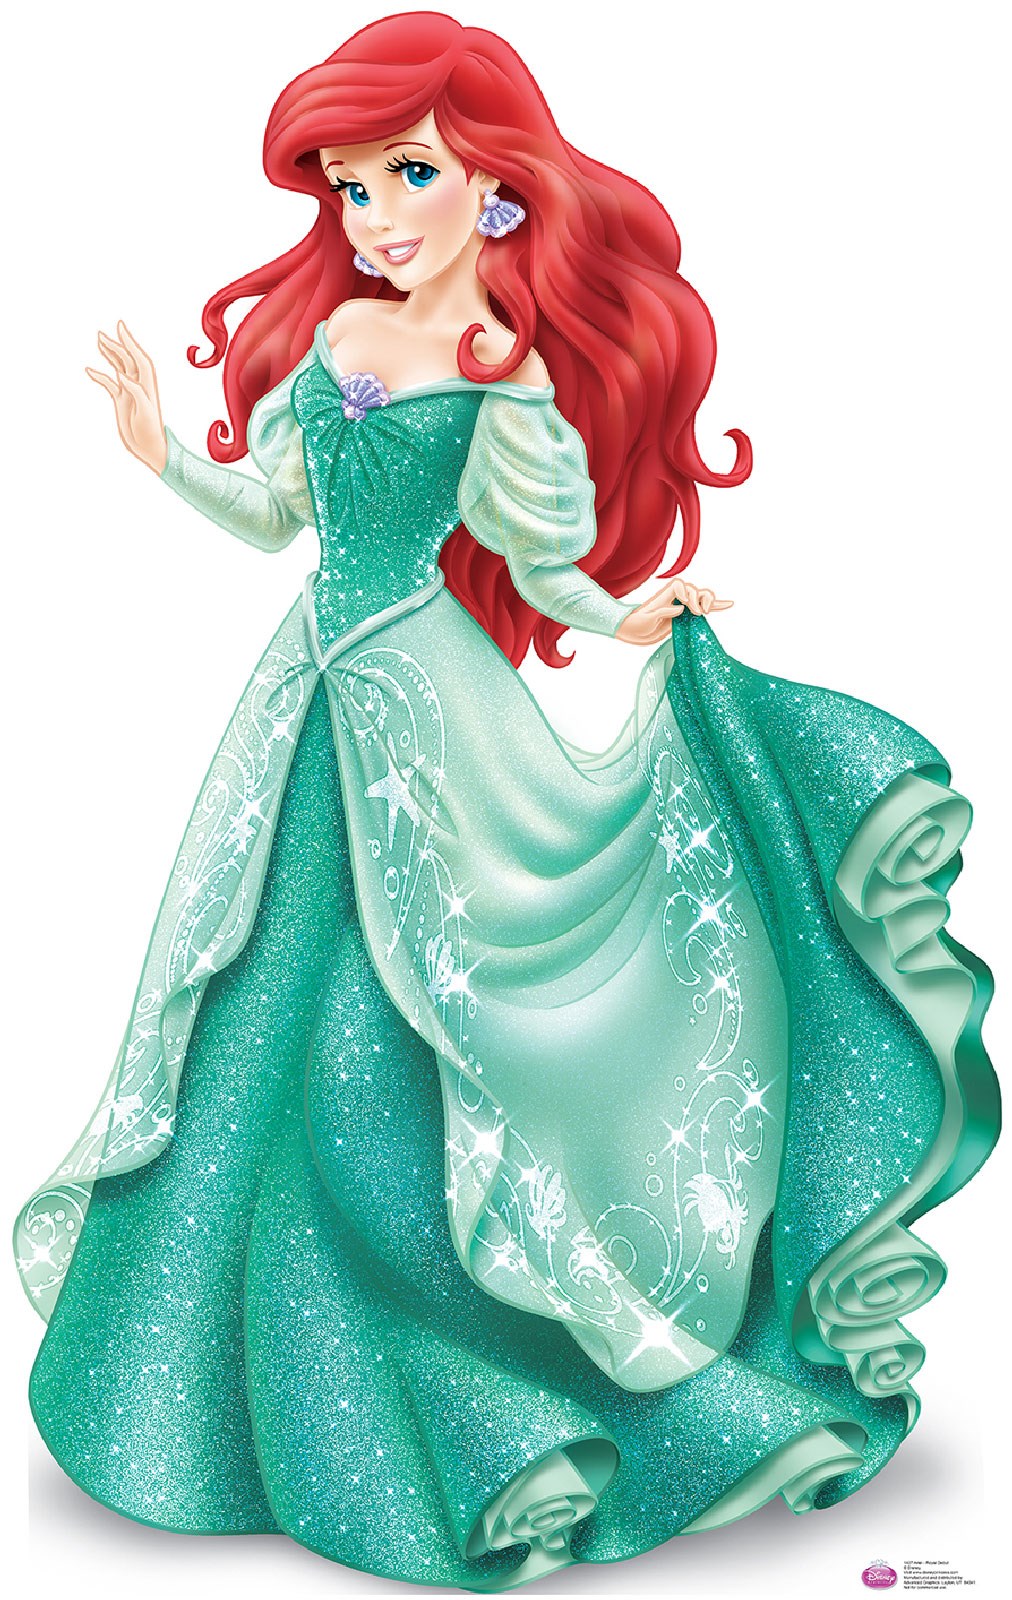 Disney Princess Ariel Cardboard Stand Up 5.1